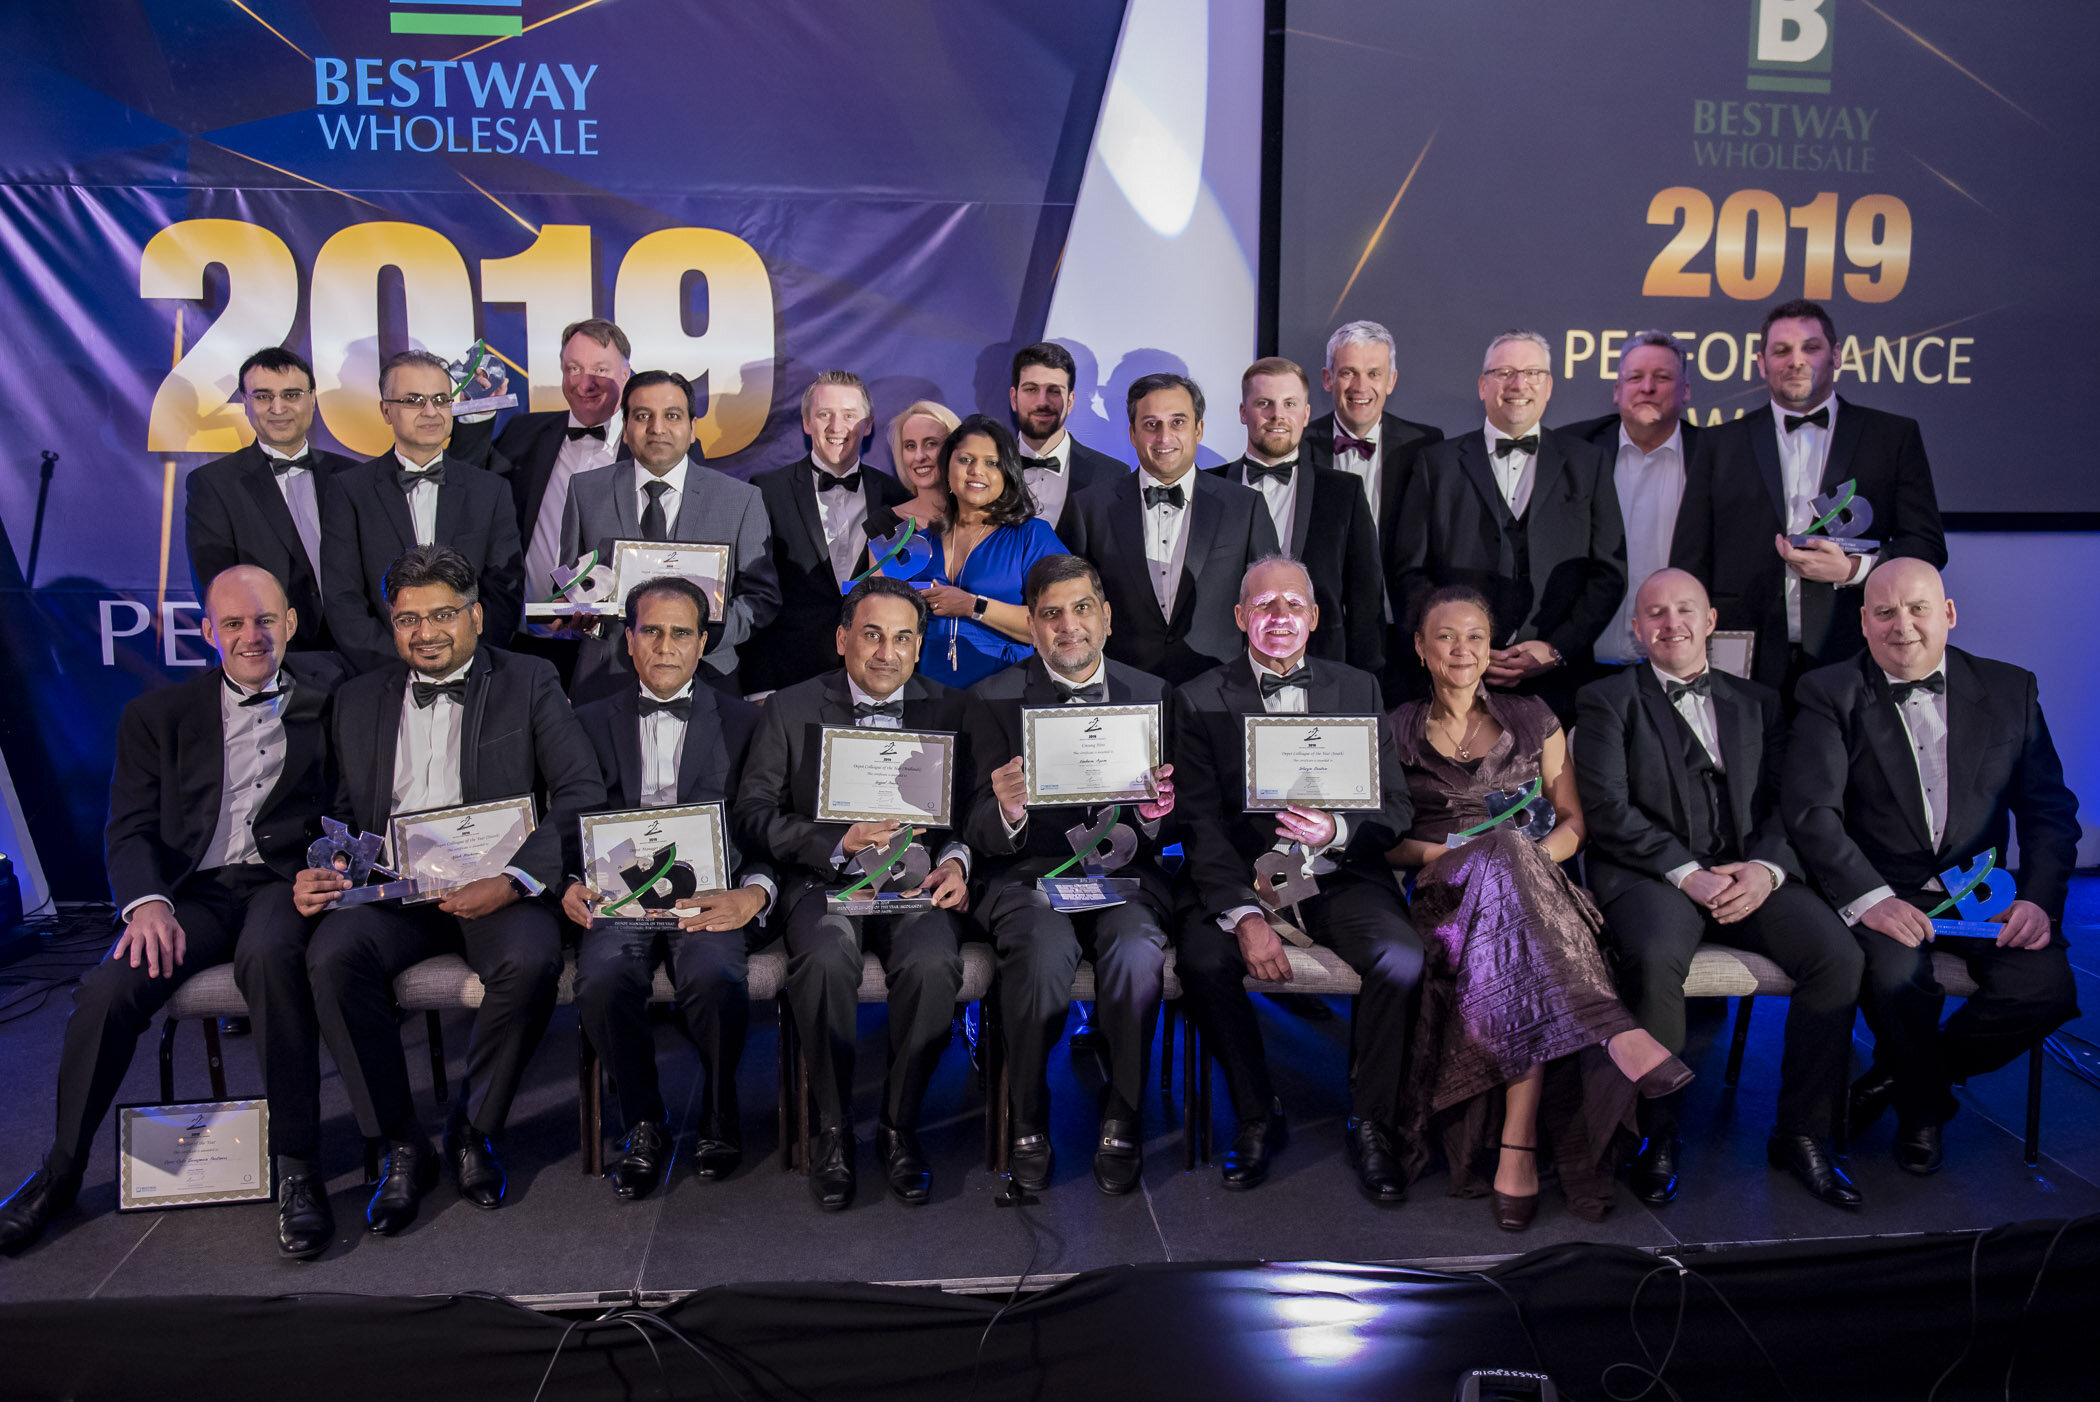 Bestway Performance Awards 2019_March 12, 2020_001.jpg